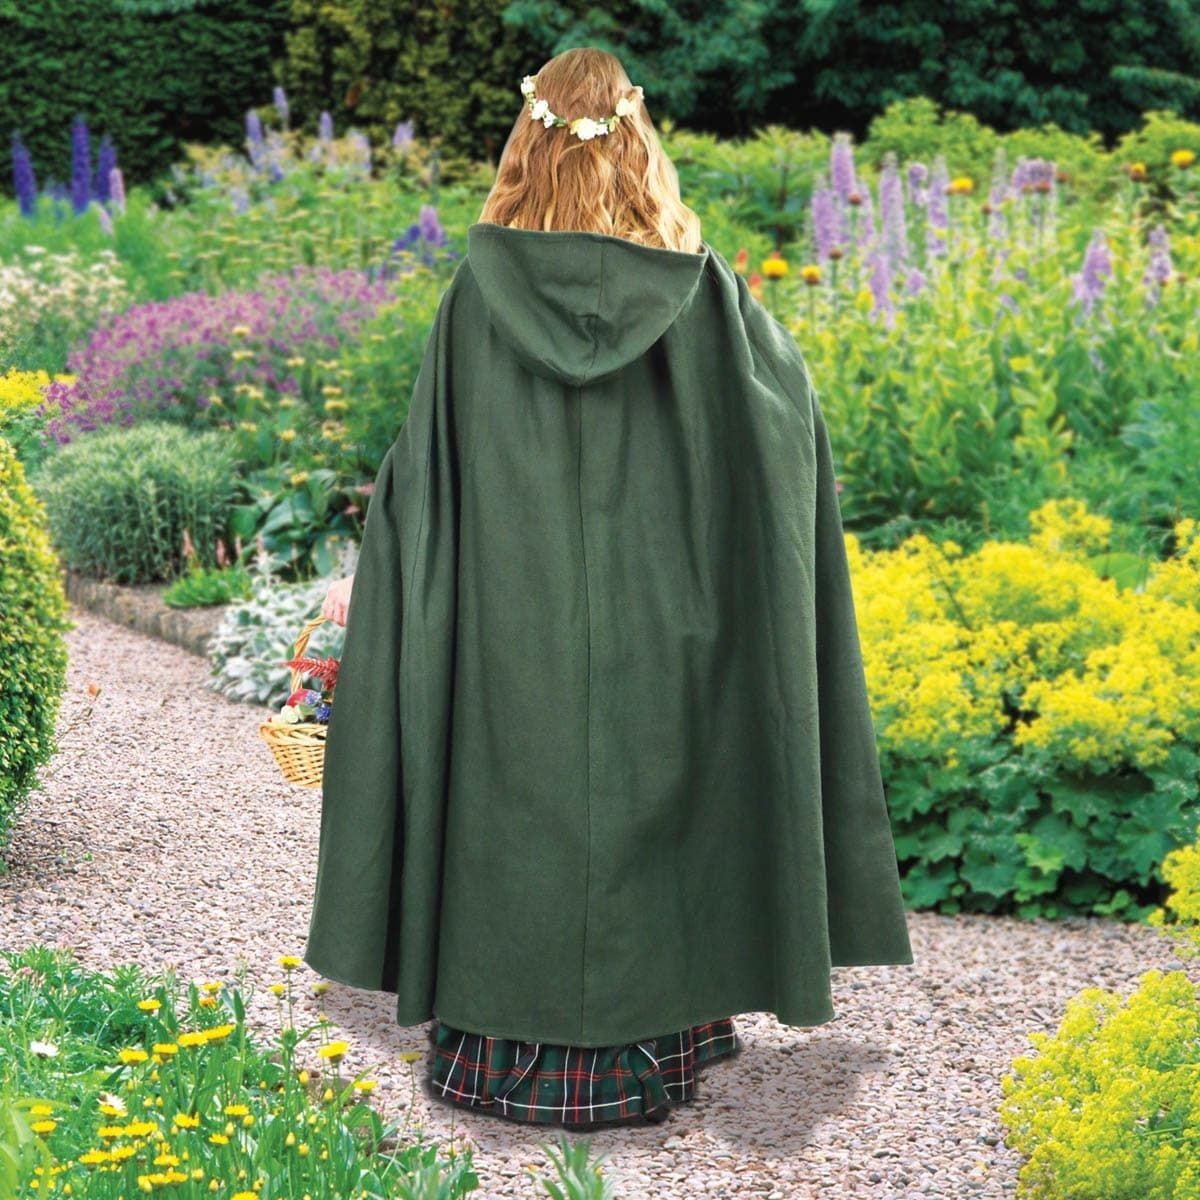 medieval cloak